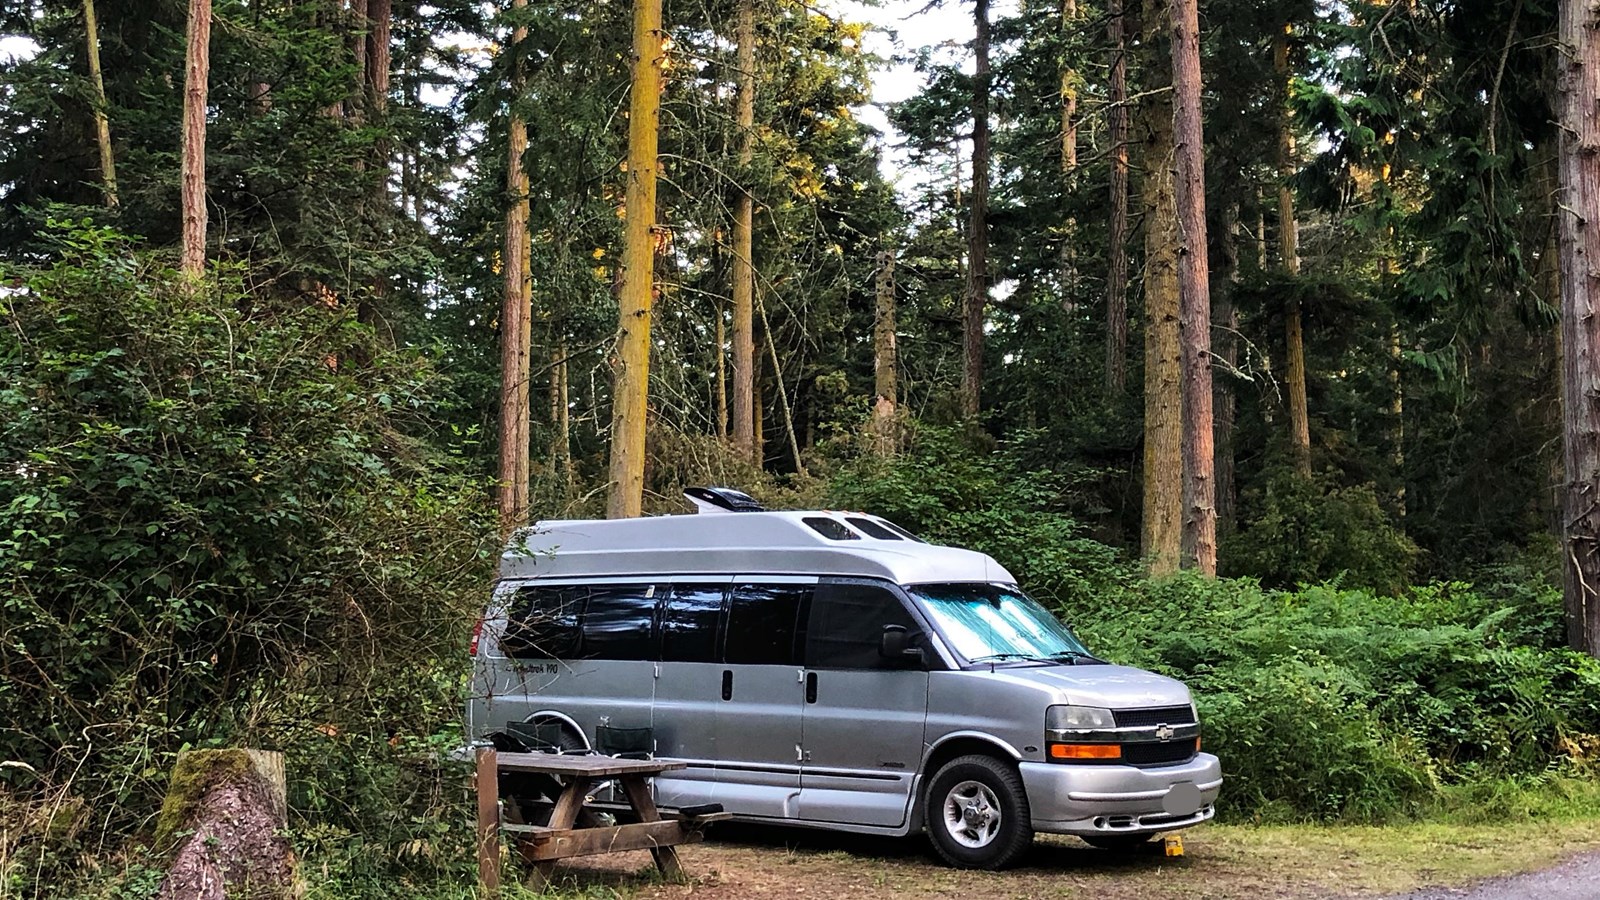 Color photograph of a camper van parked at a rustic campsite